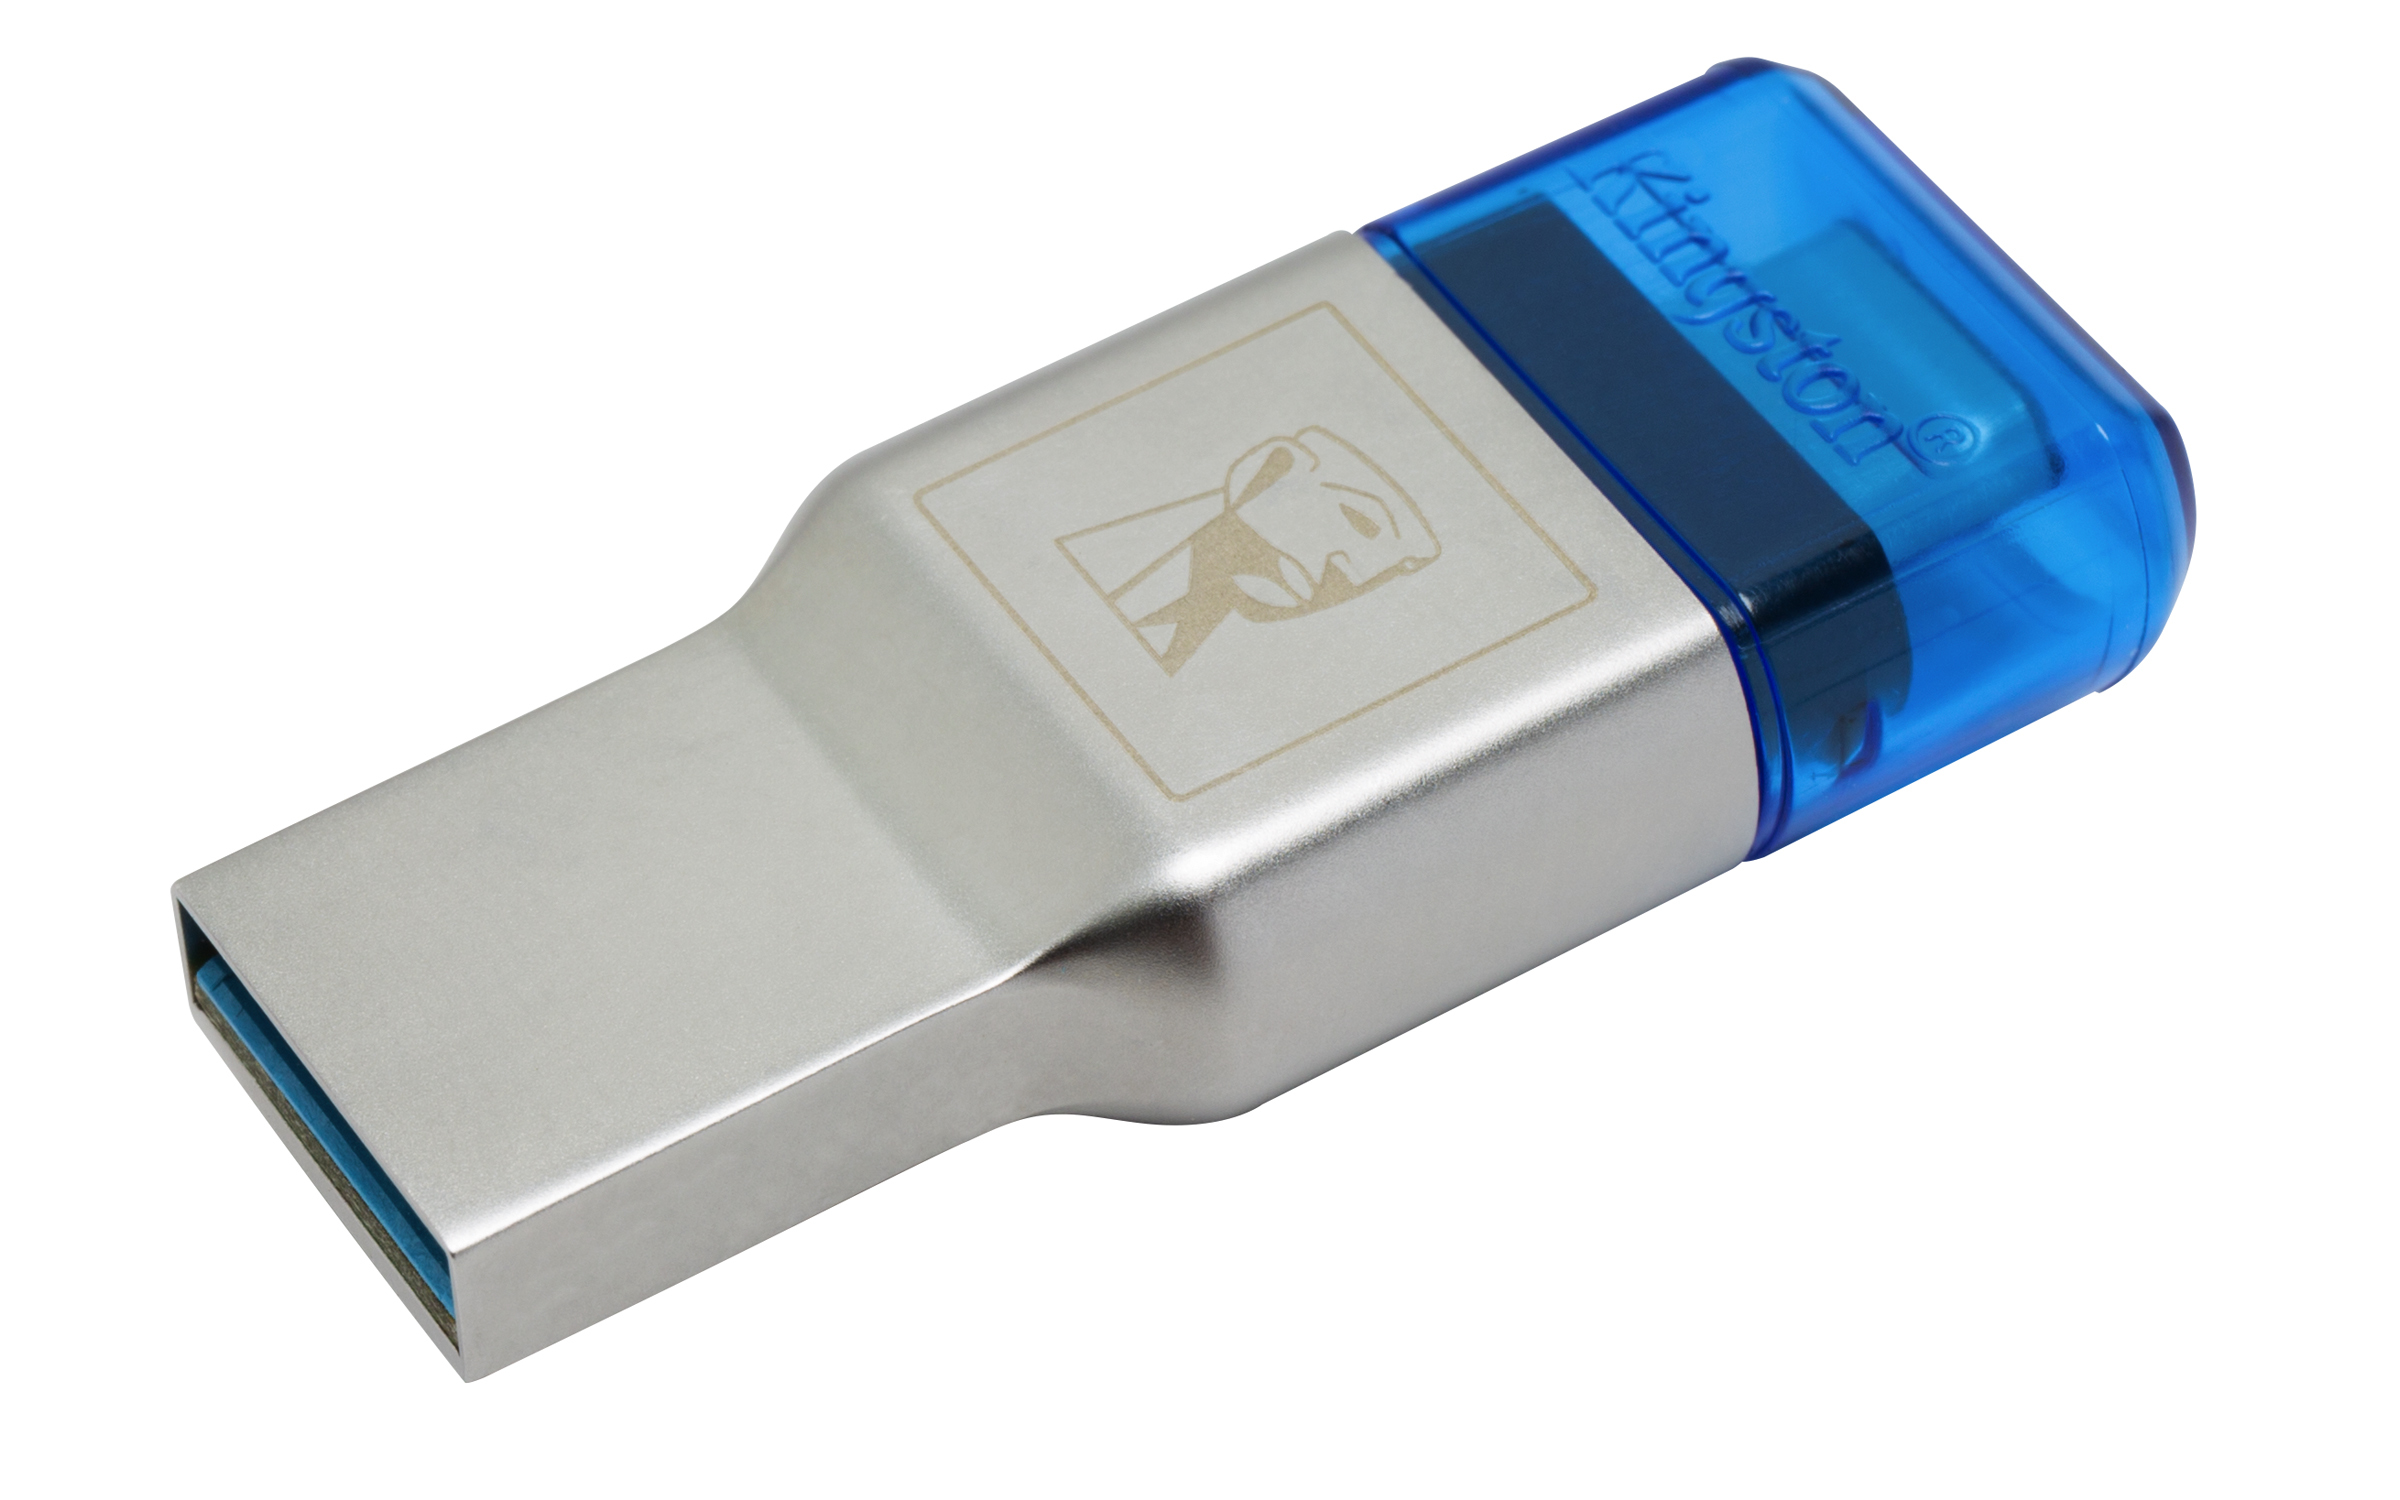 MobileLite DUO 3C USB3.1+TypeC microSDHC/SDXC Card Reader